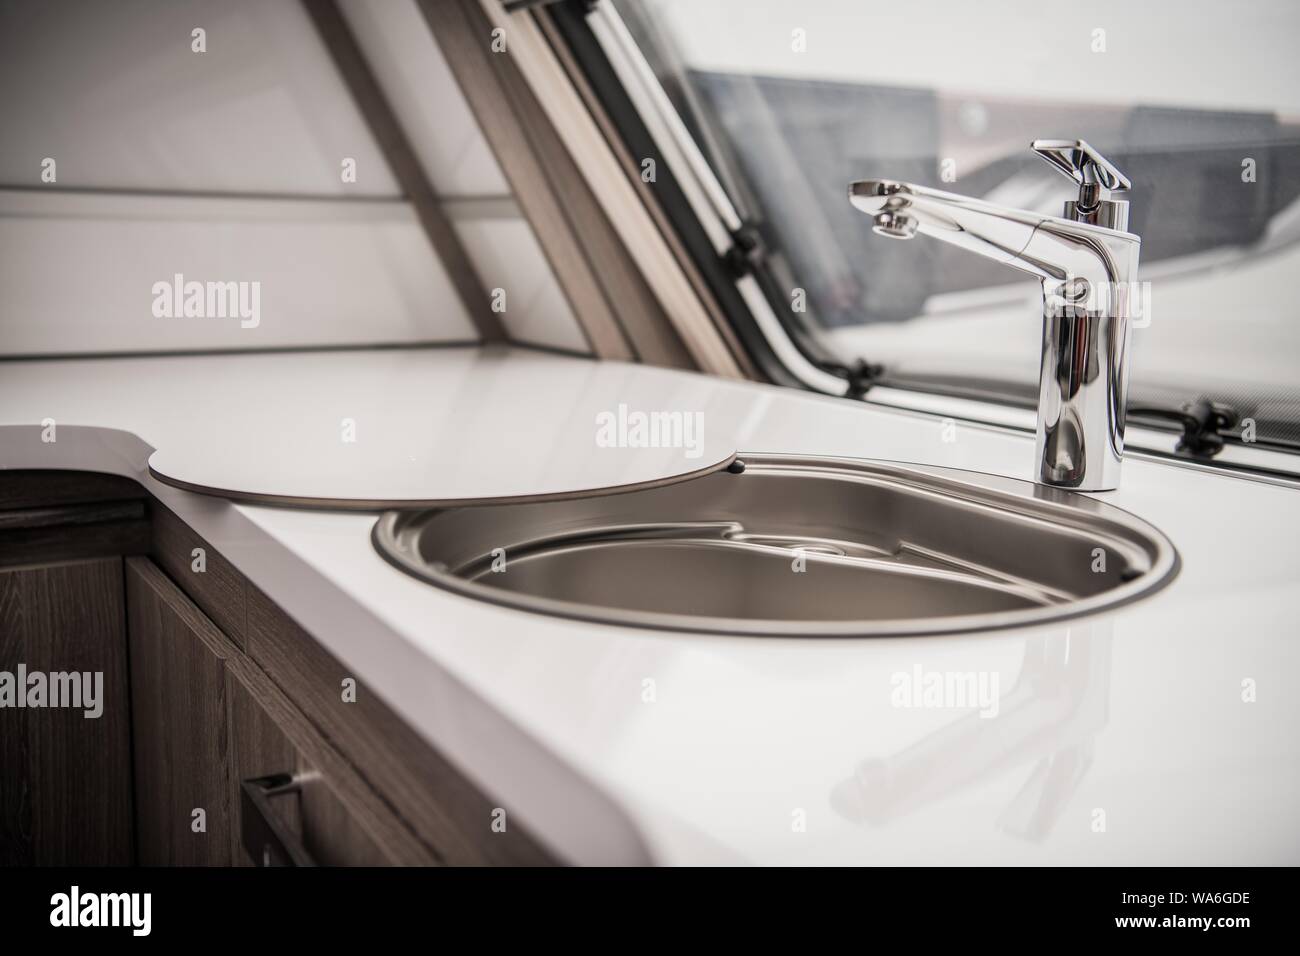 Circular RV Camper Sink and Faucet. Elegant Recreation Vehicle Interior. Stock Photo